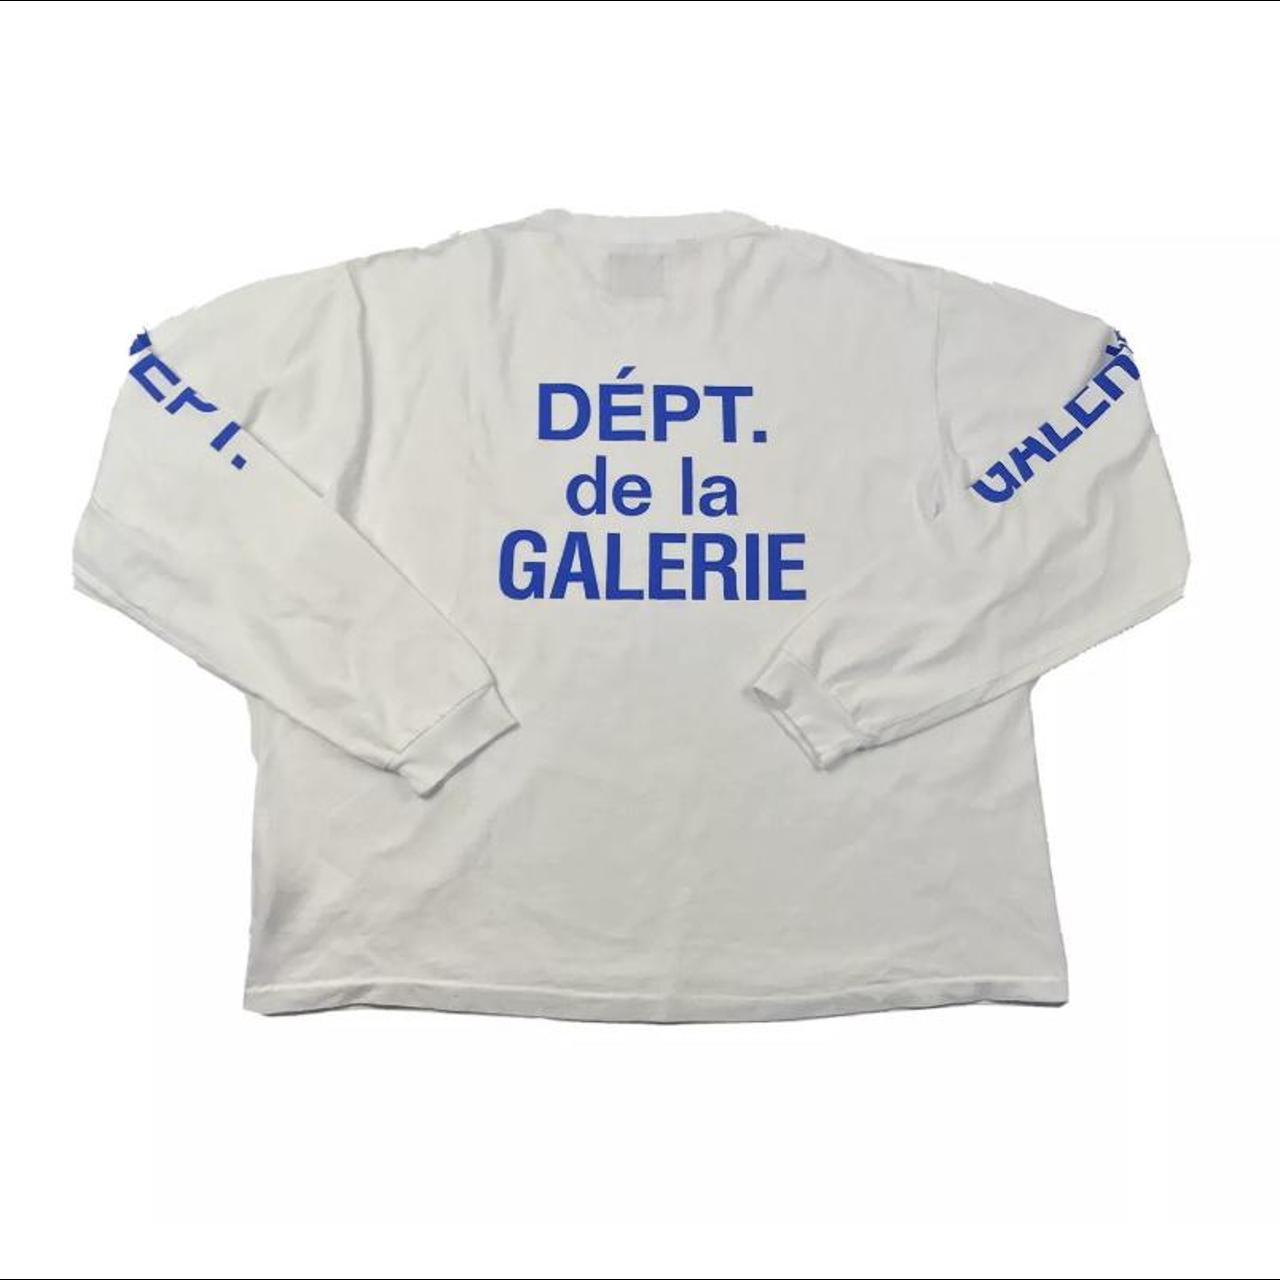 GALLERY DEPT. DEPT. DE LA GALERIE LS WHITE T-SHIRT... - Depop